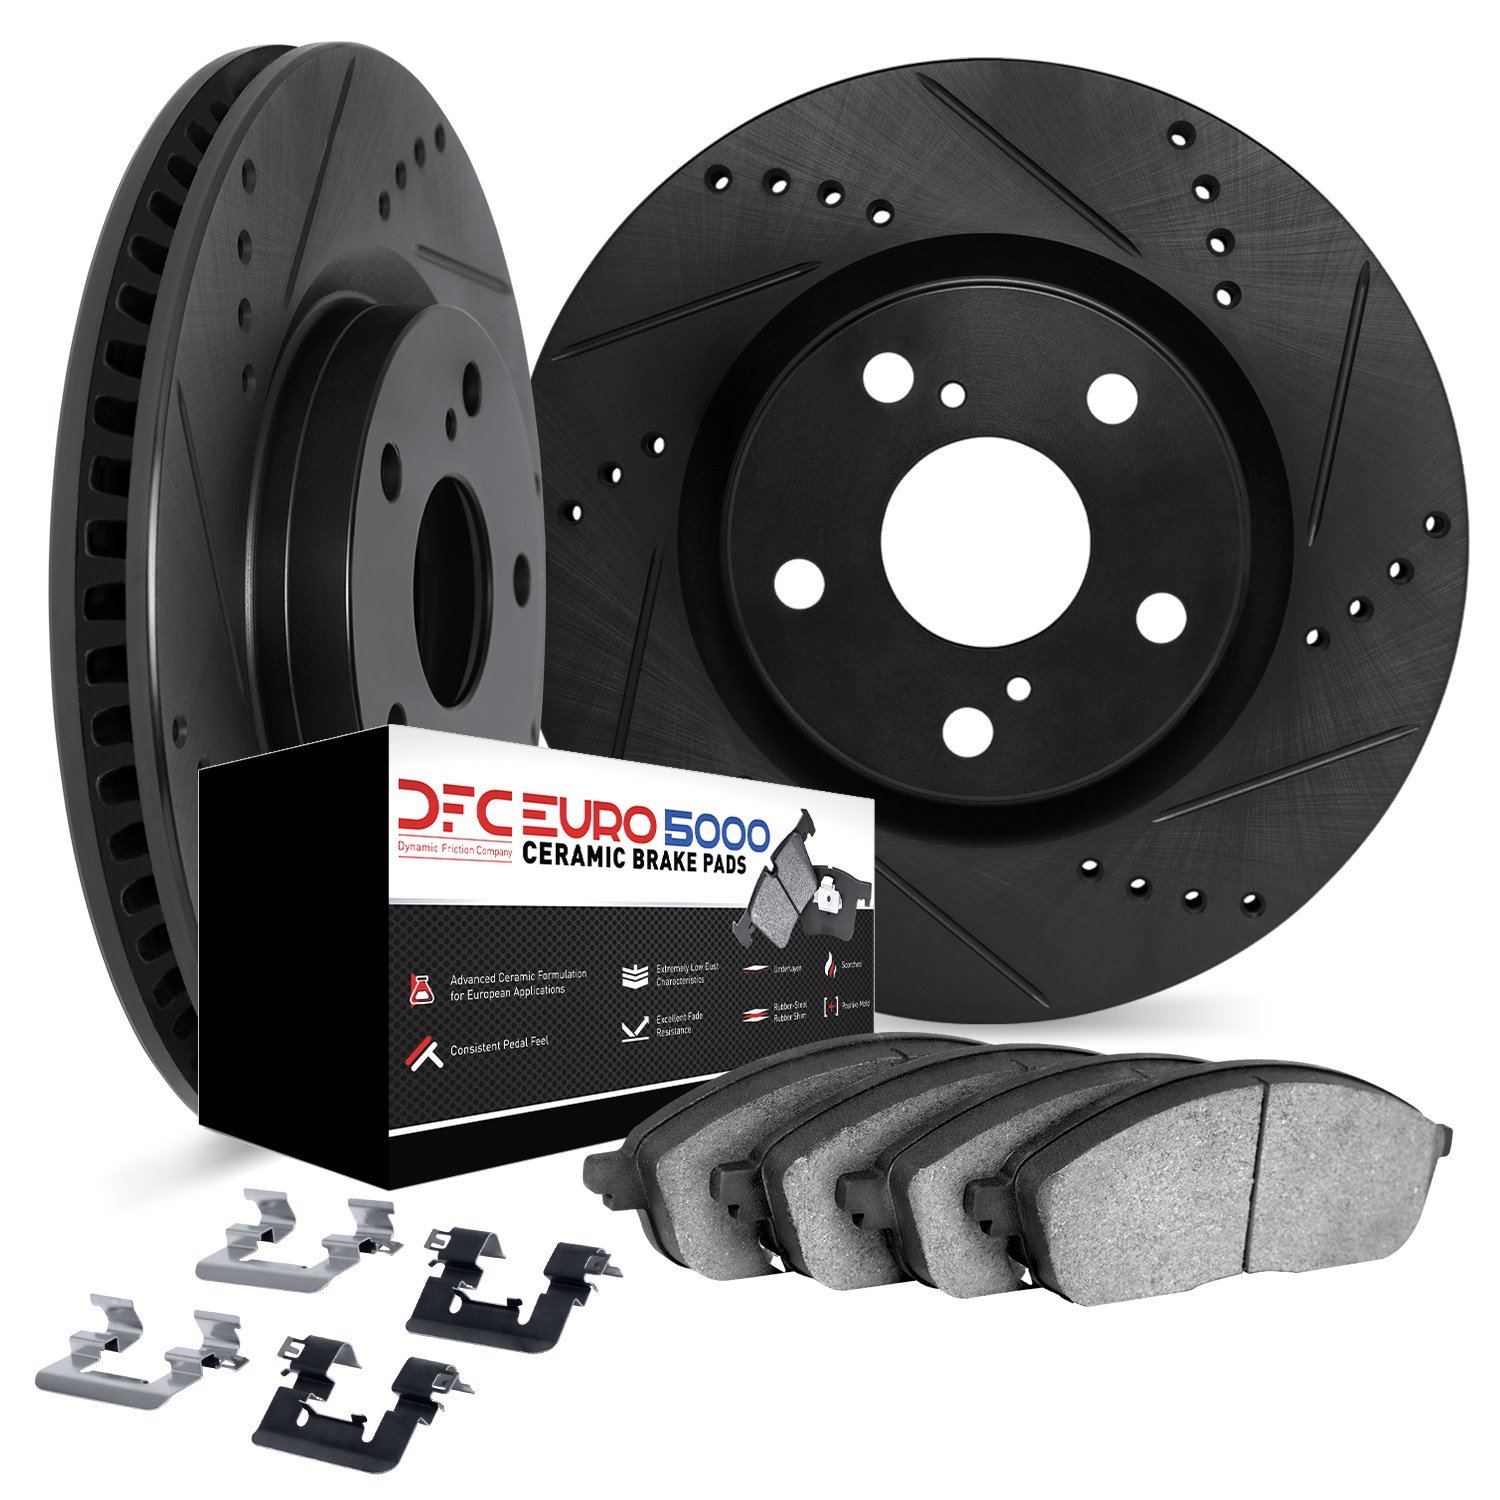 8612-31123 Drilled/Slotted Brake Rotors w/5000 Euro Ceramic Brake Pads Kit & Hardware [Black], Fits Select Multiple Makes/Models